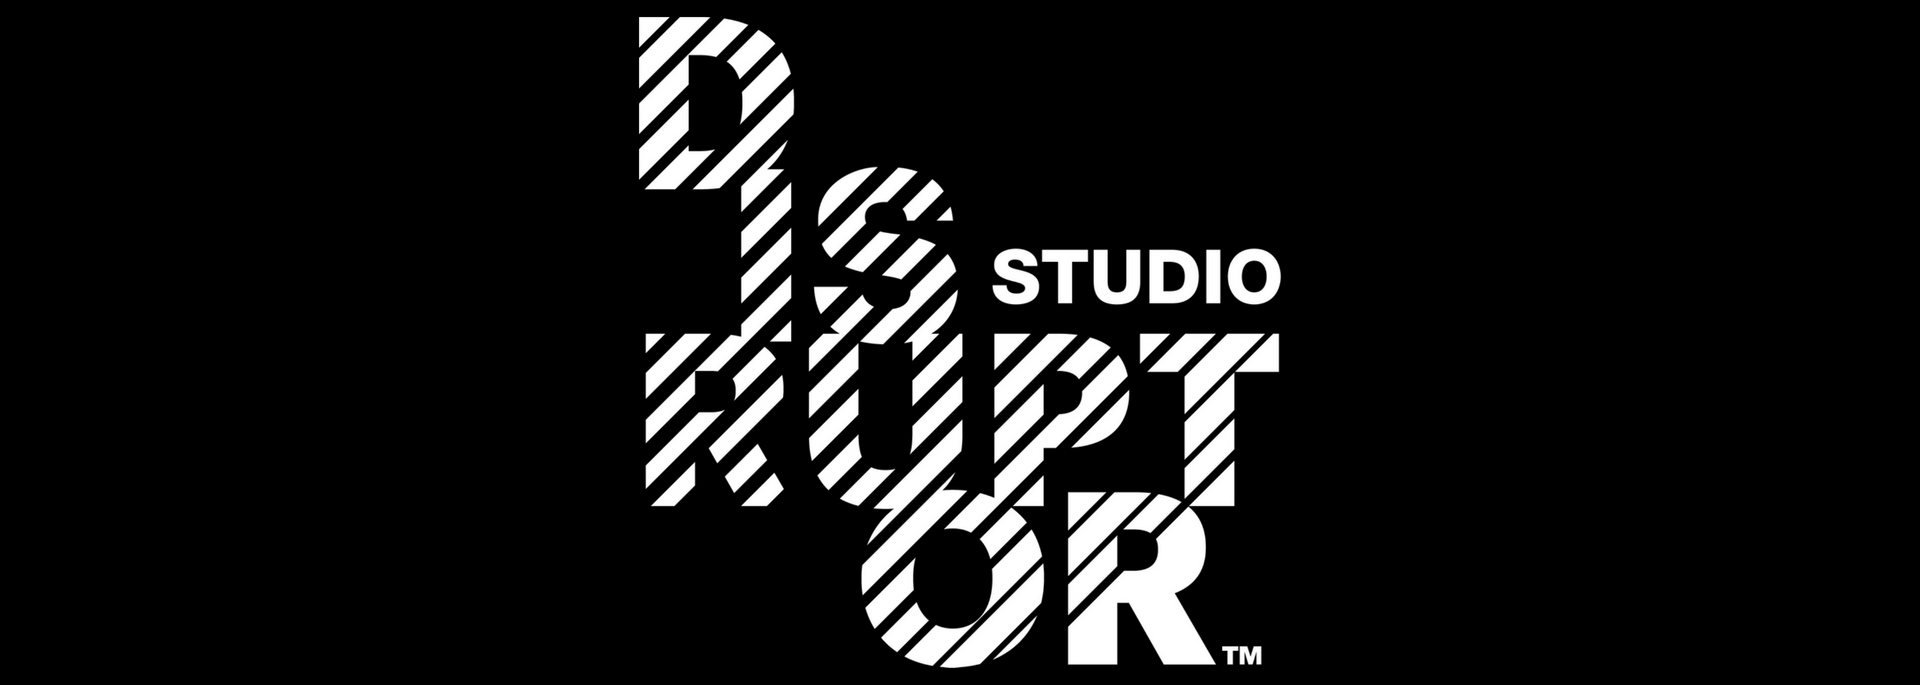 Disruptor Studio channel